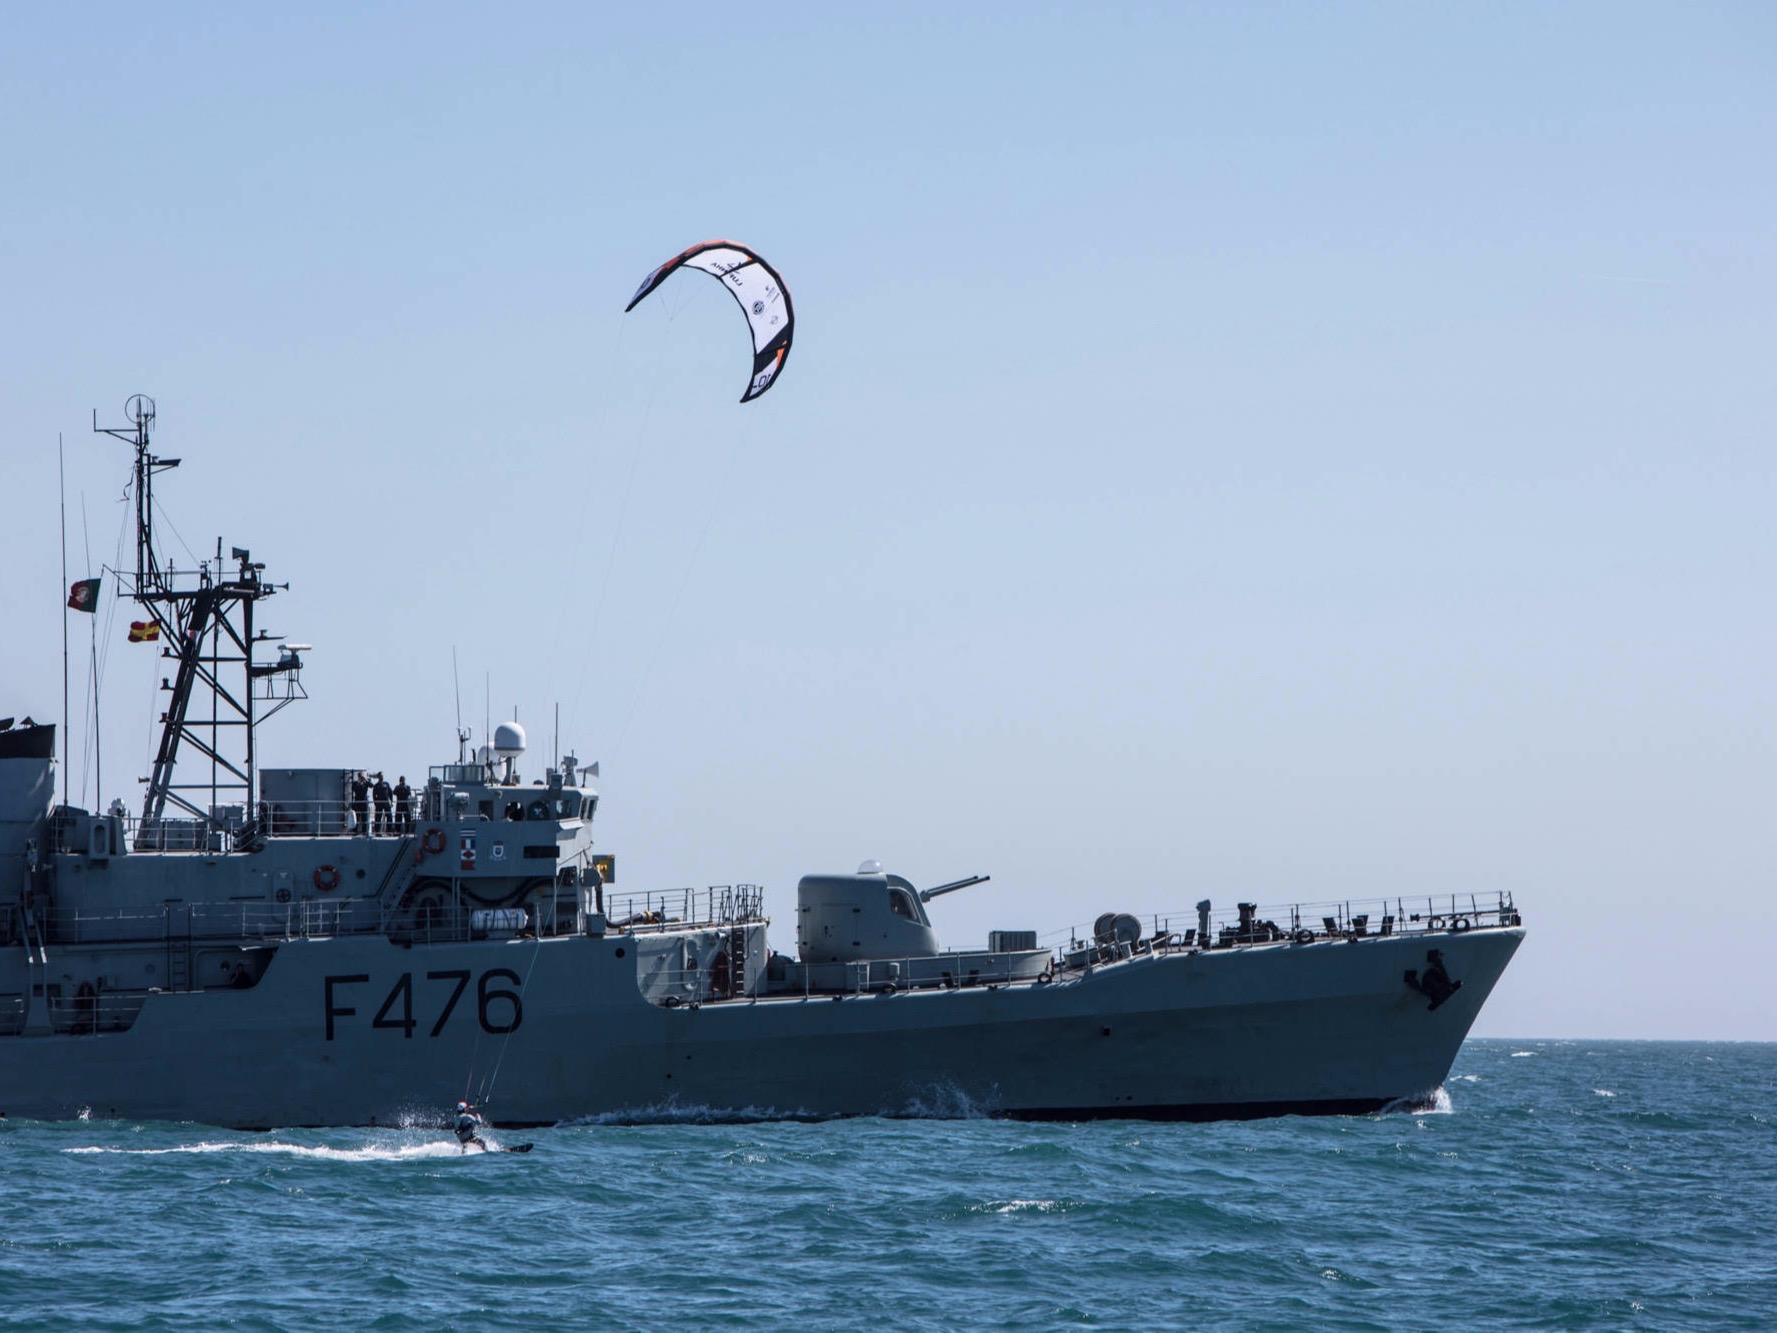 Lufinha kitesurfing besides Portuguese navy ship